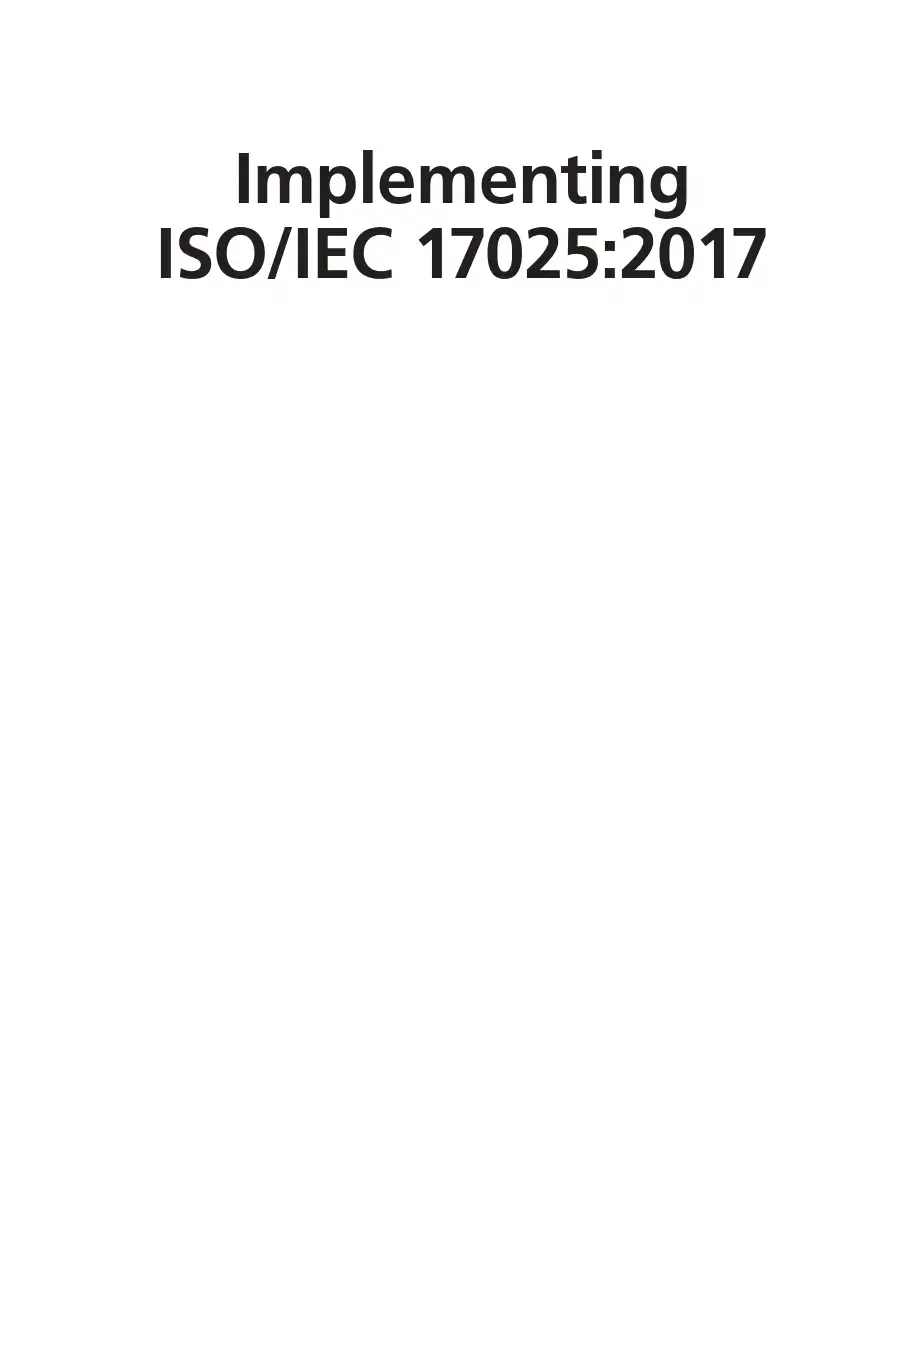 Implementing ISOIEC 170252017